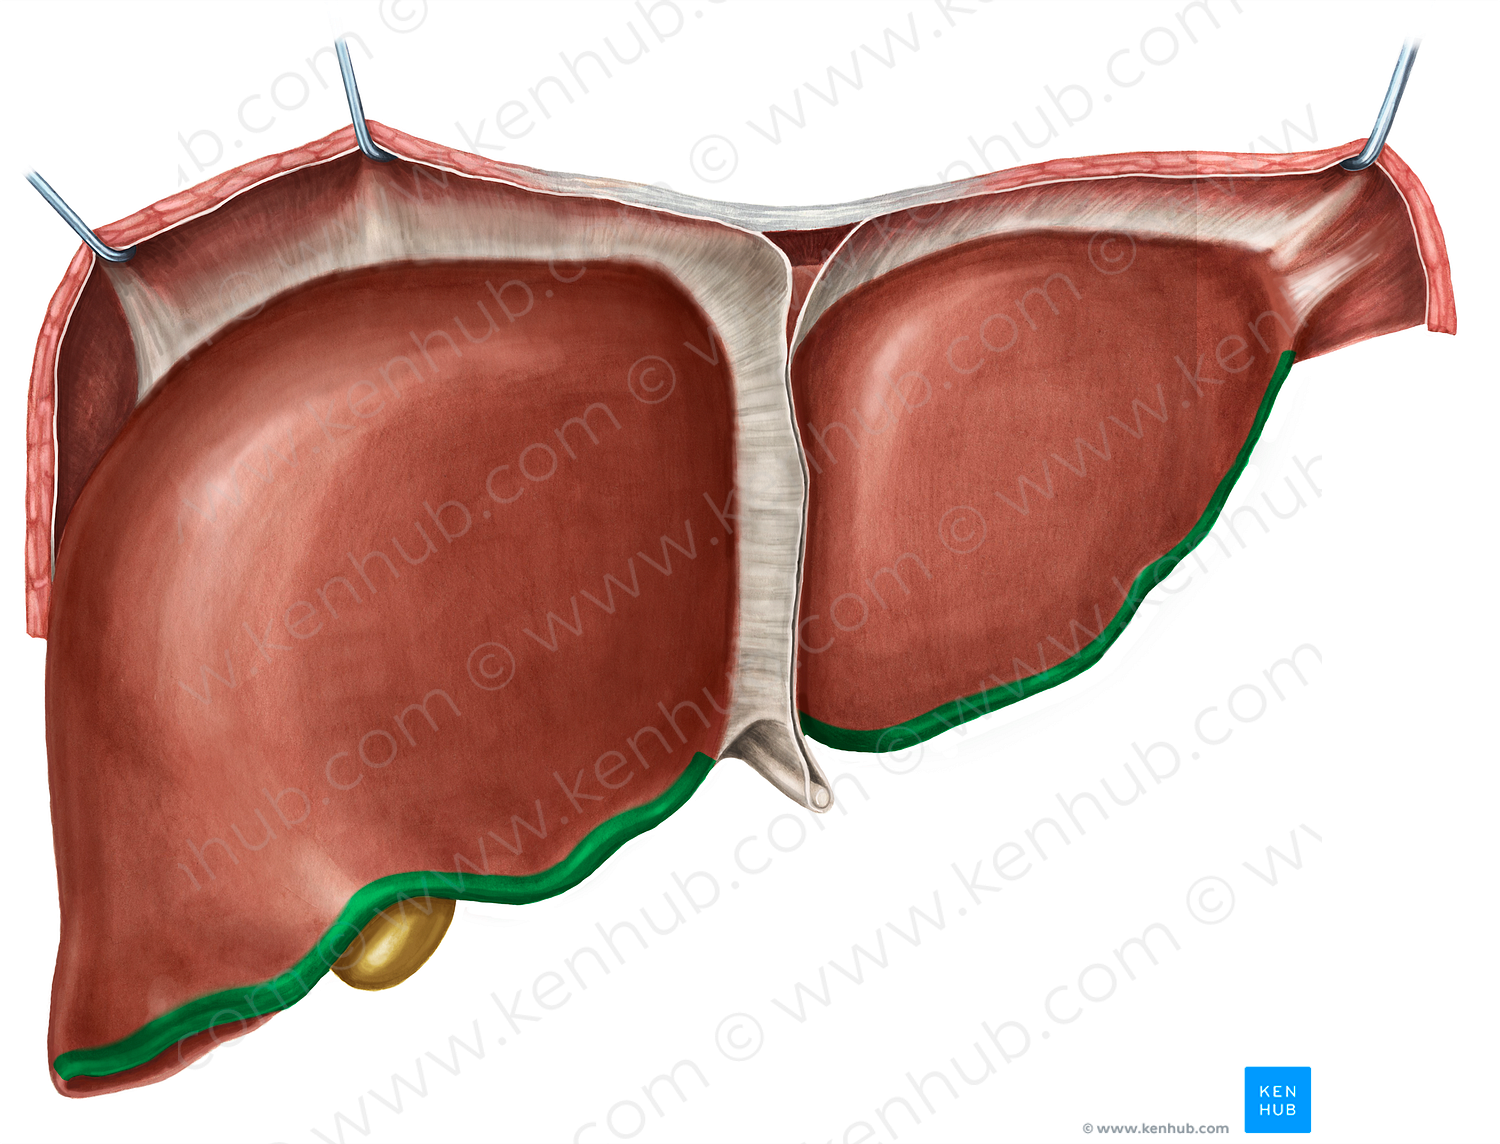 Inferior border of liver (#4924)